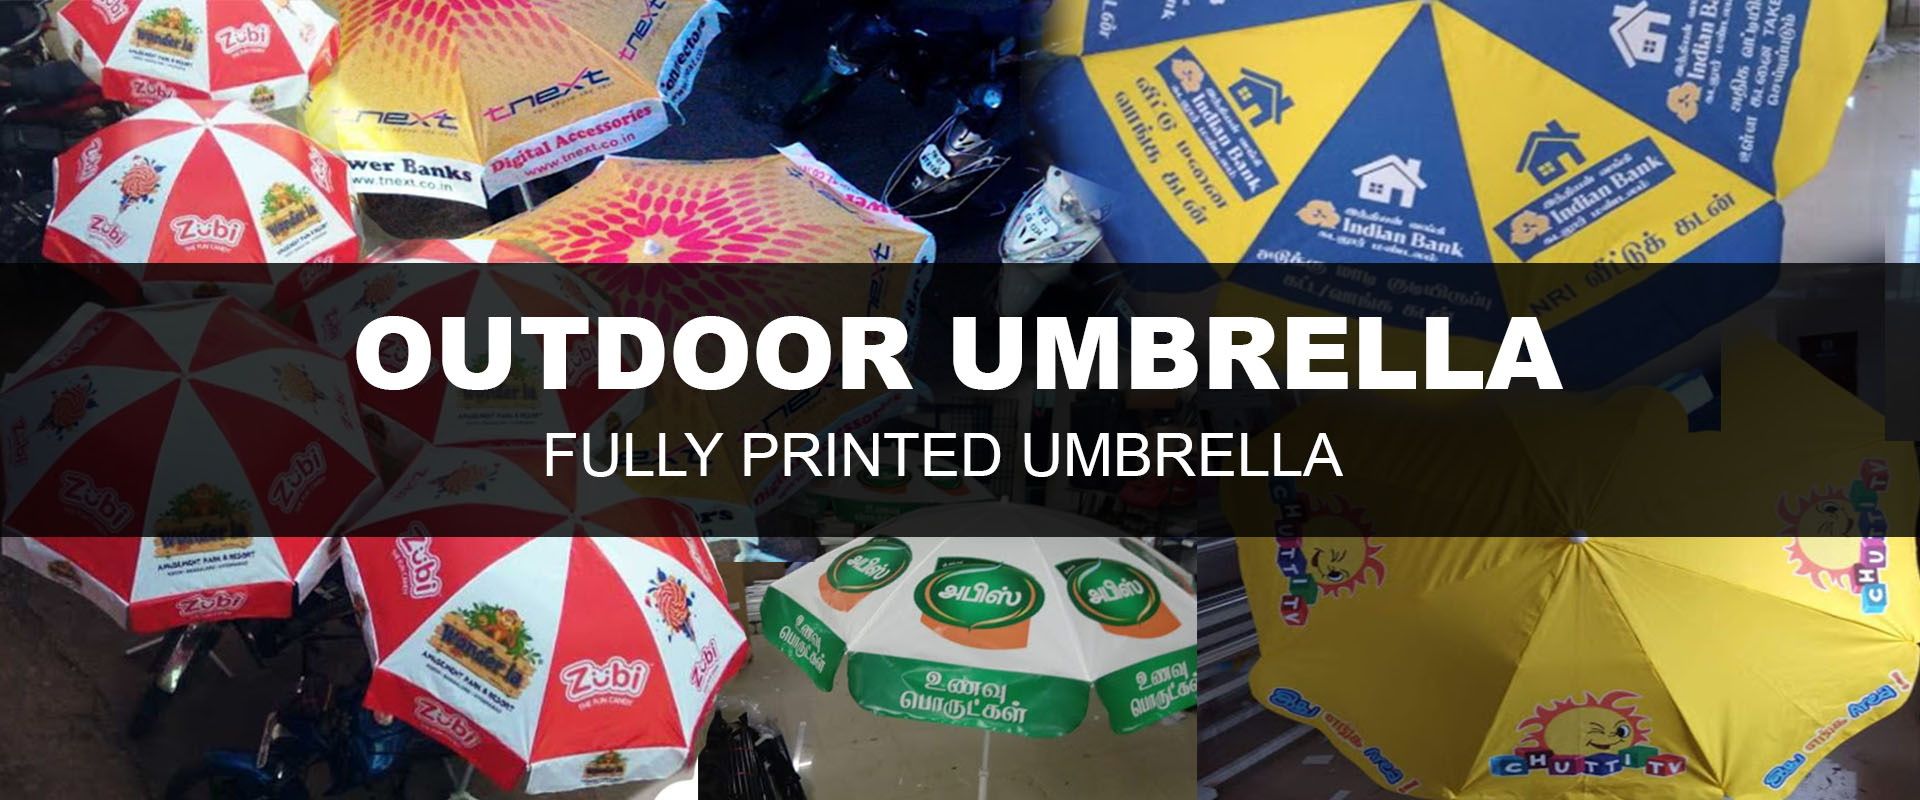 Outdoor Umbrella Printing in Chennai